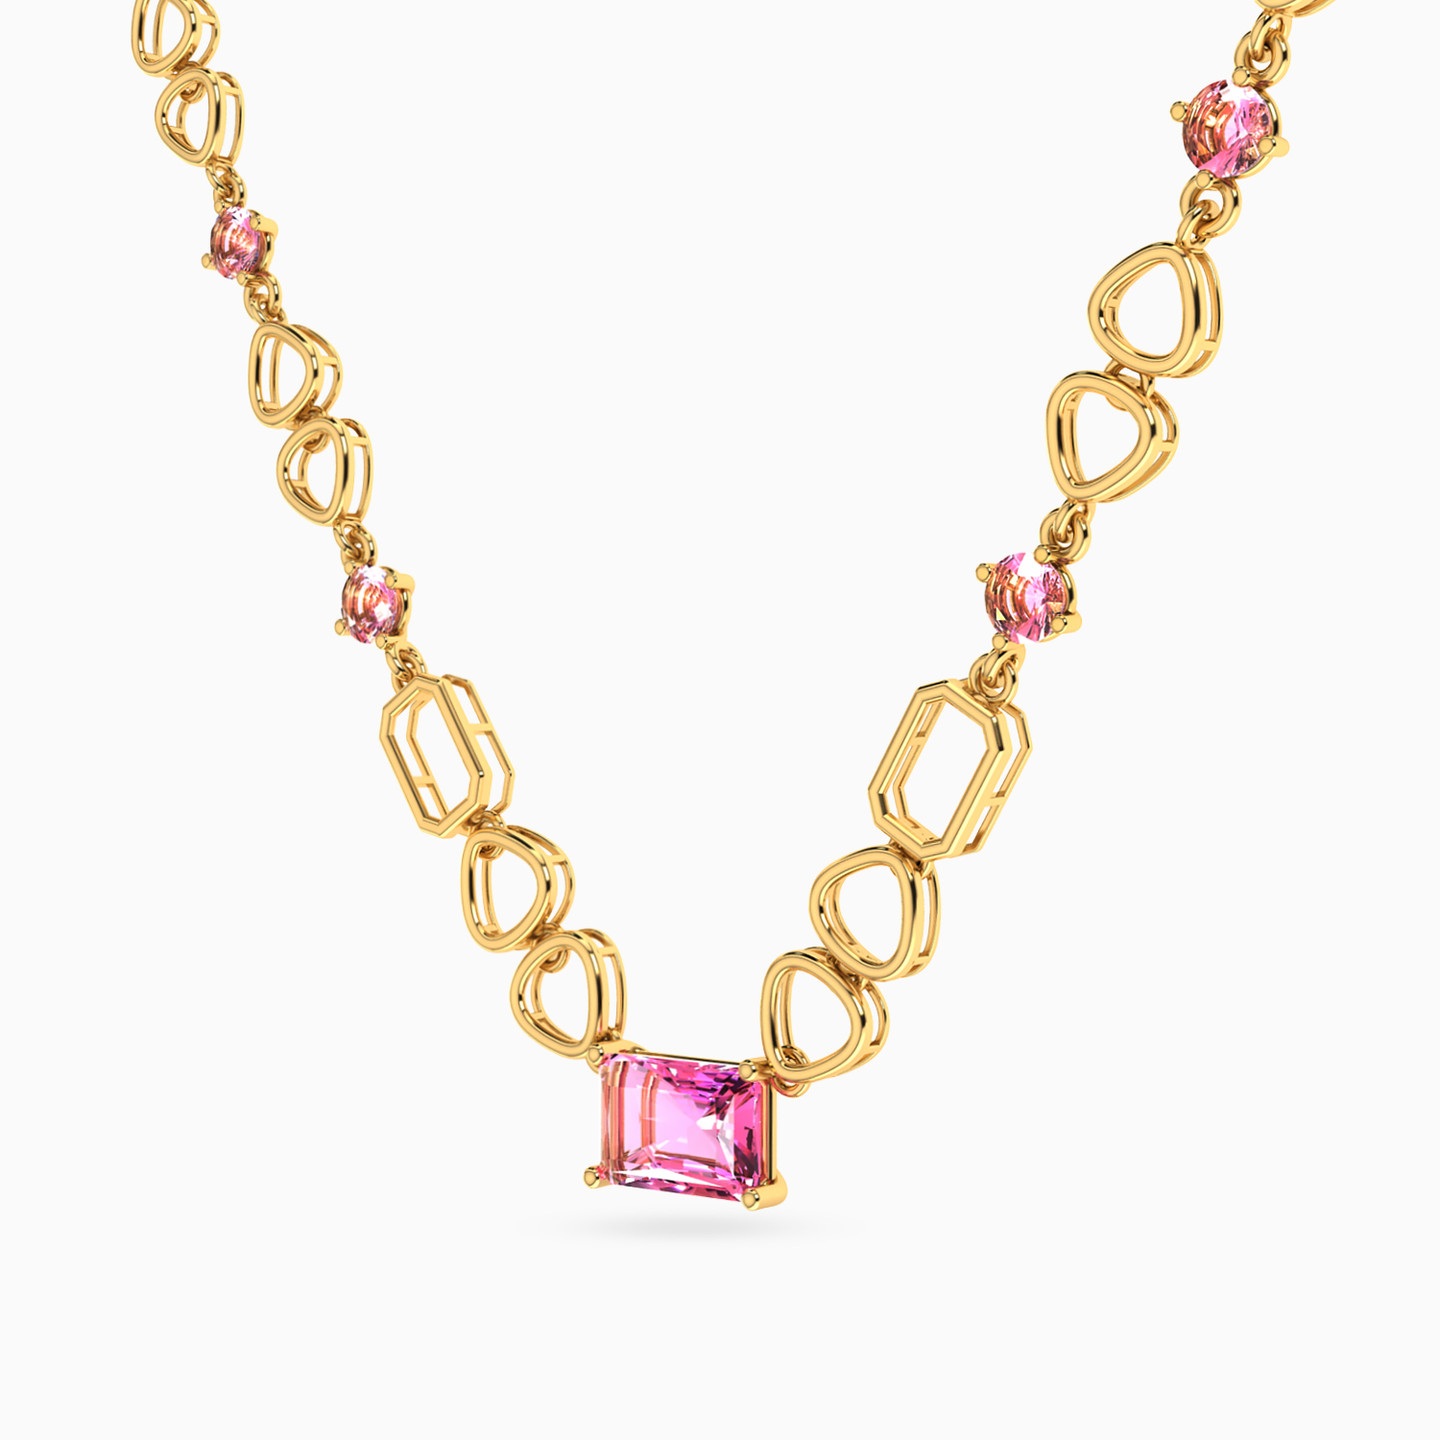 14K Gold Colored Stones Pendant Necklace - 2